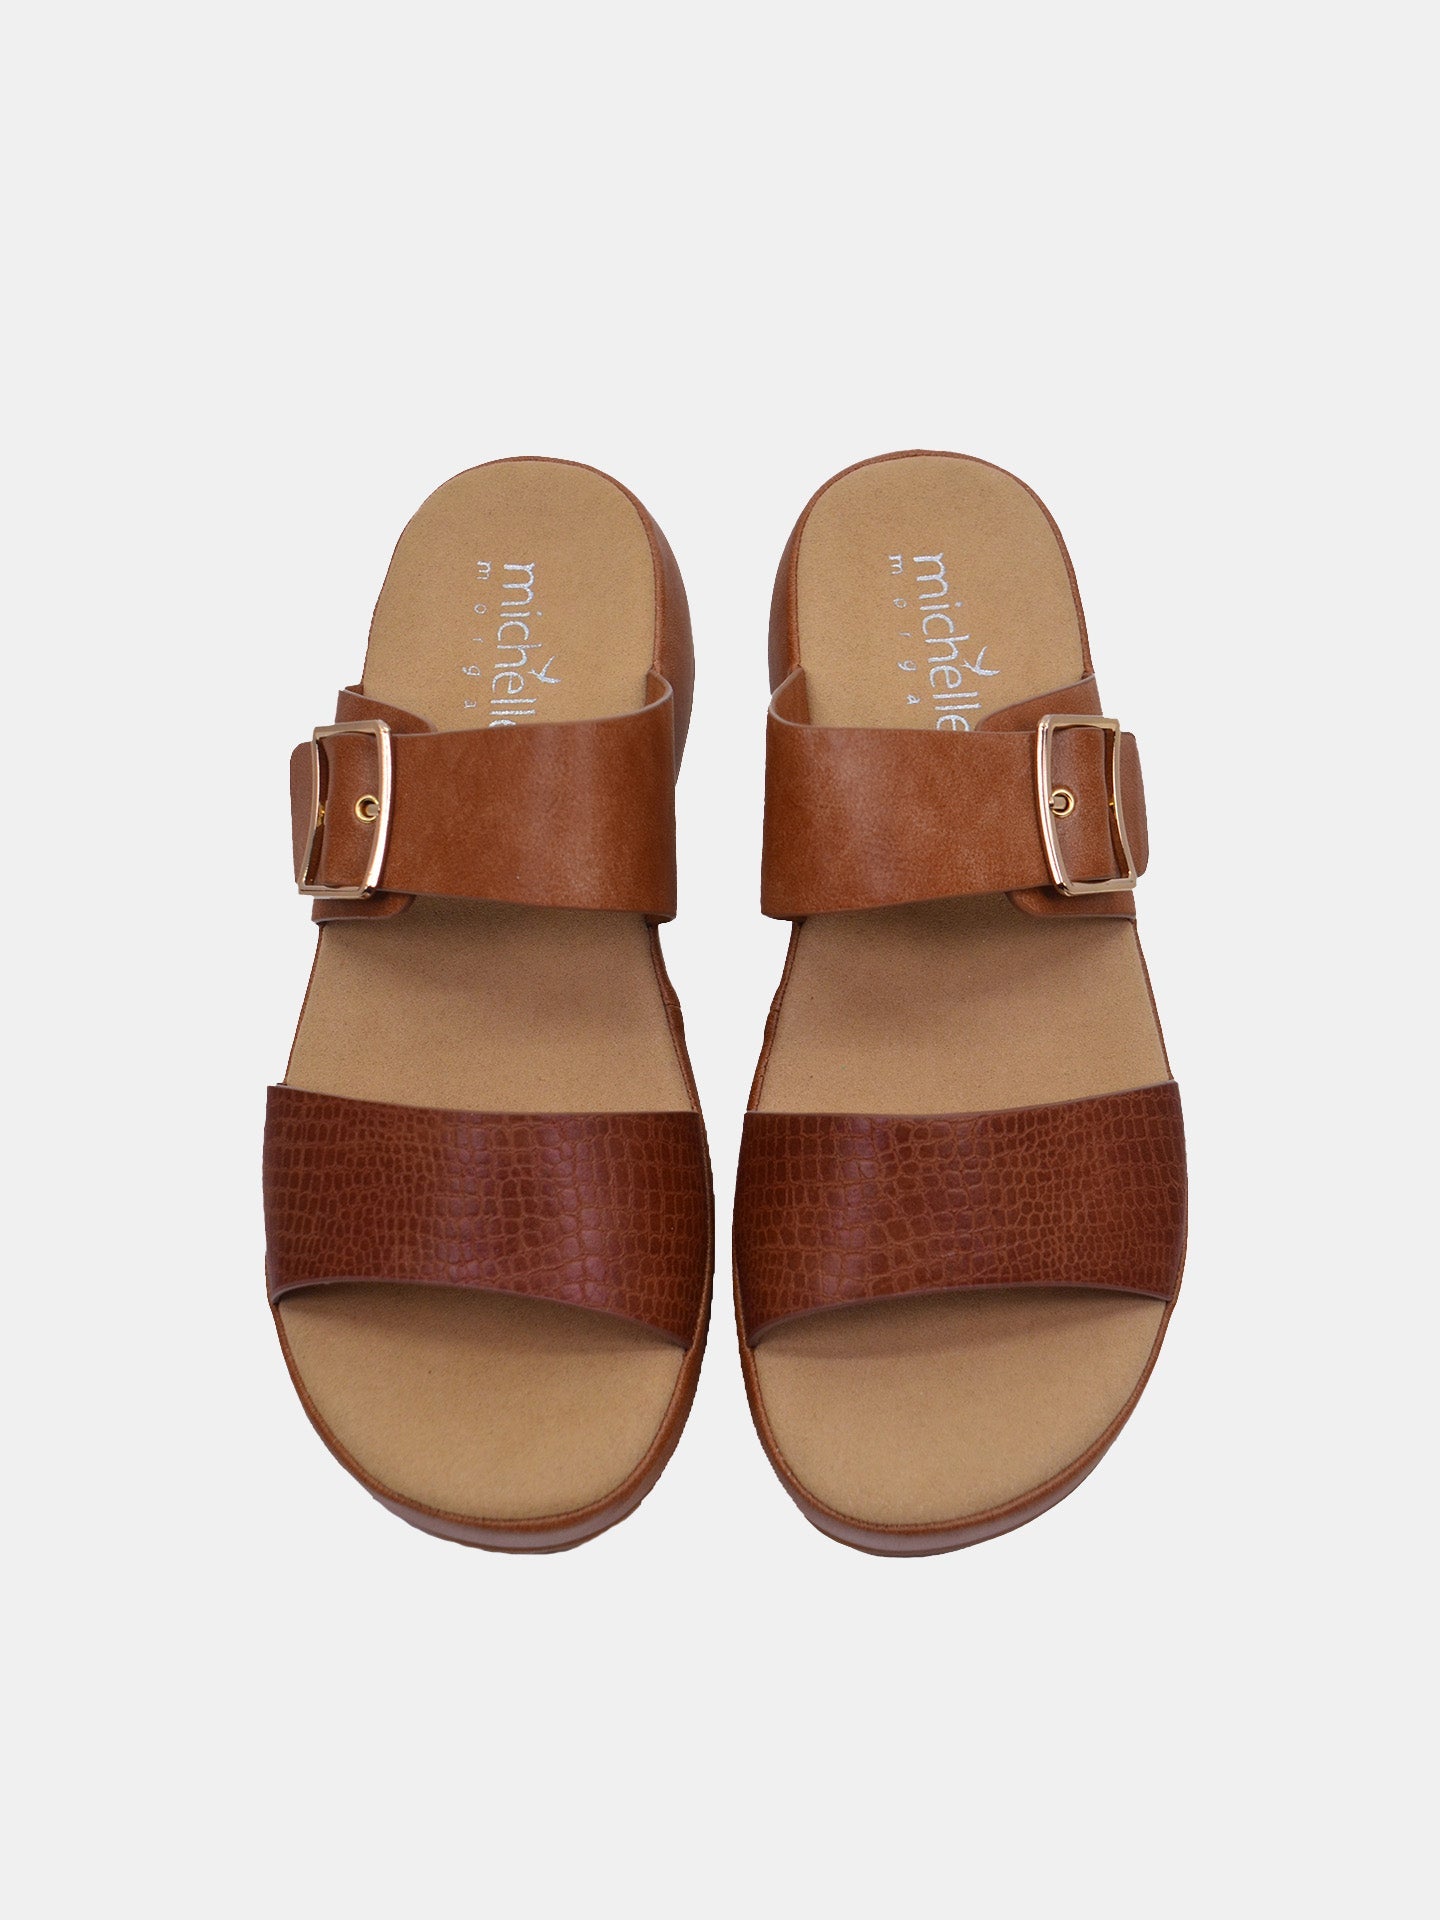 Michelle Morgan 114RL191 Women's Flat Sandals #color_Brown